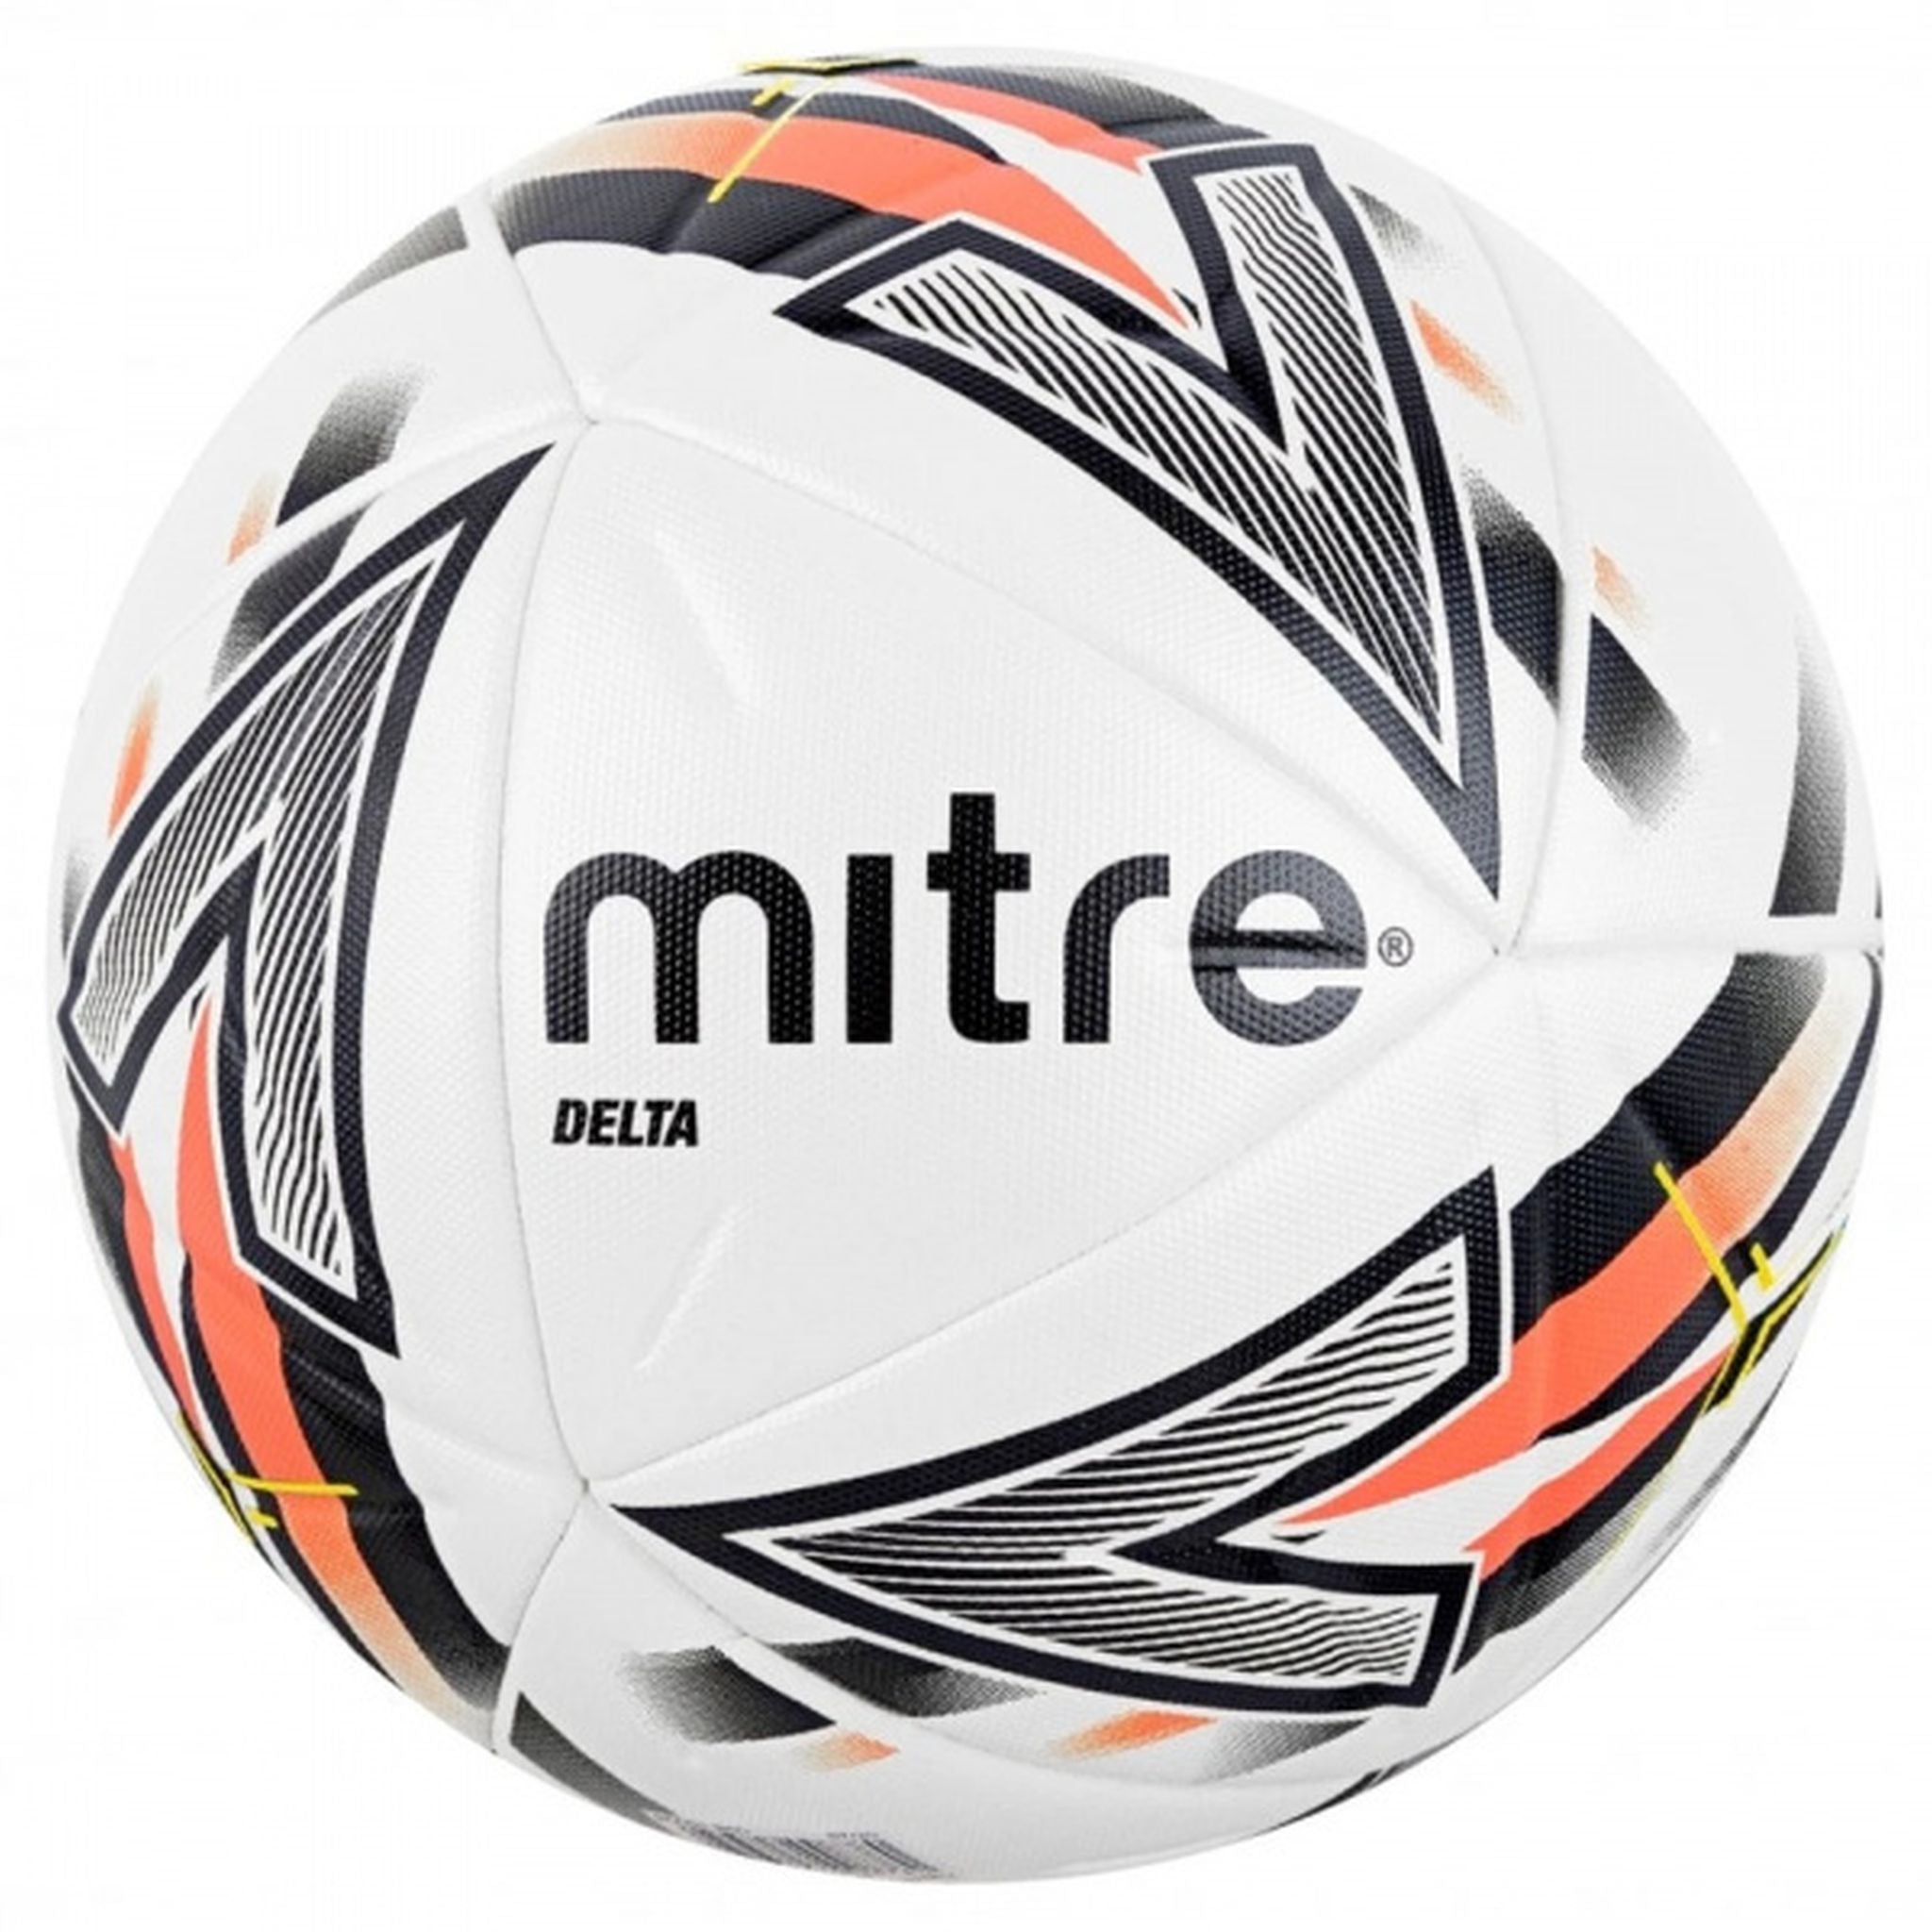 MITRE Delta One Soccer Ball